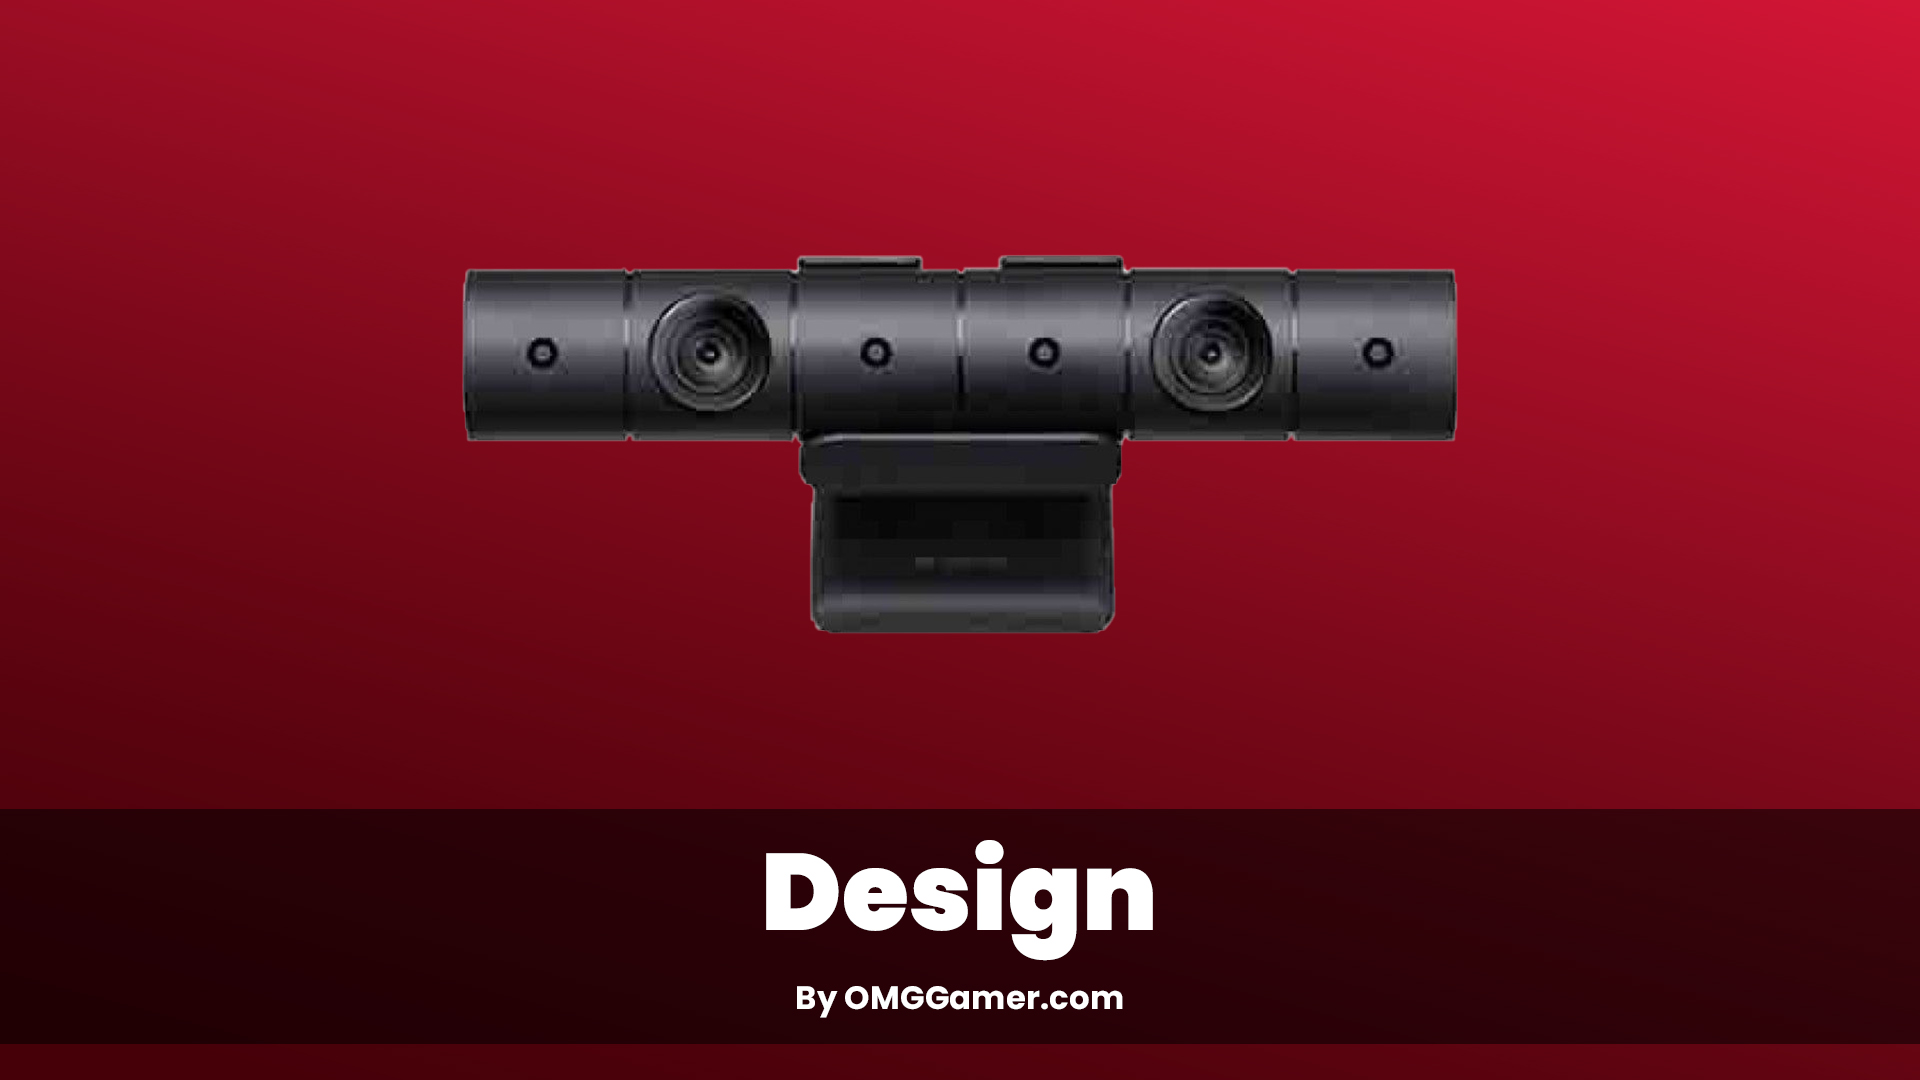 PlayStation Camera review: Design